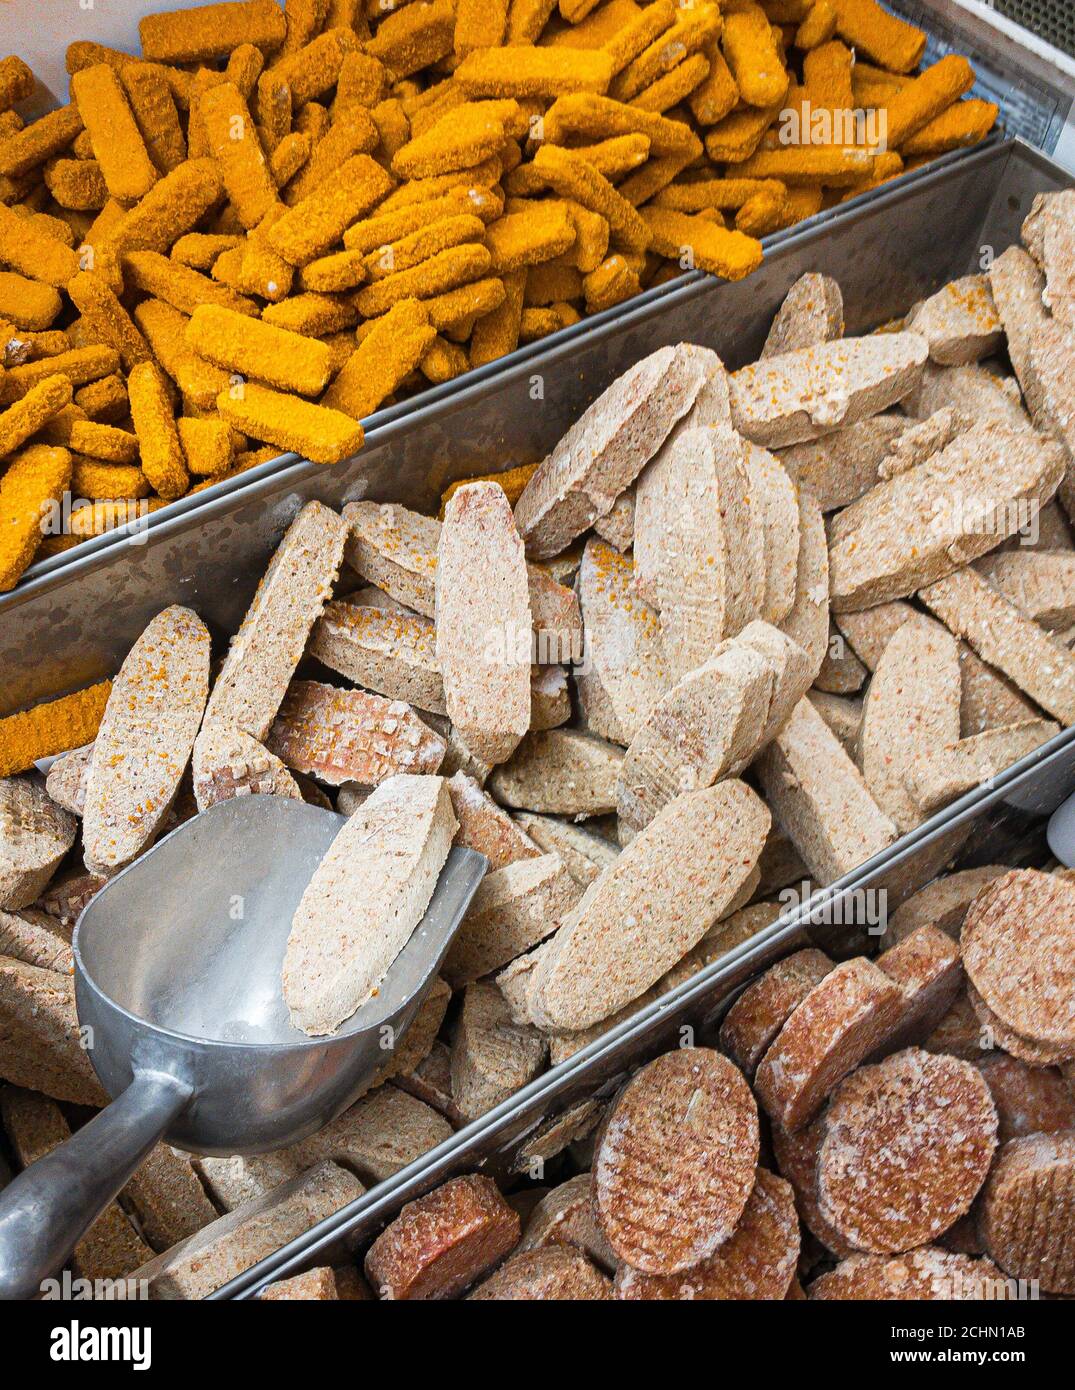 meat semis in supermarket freezer Stock Photo